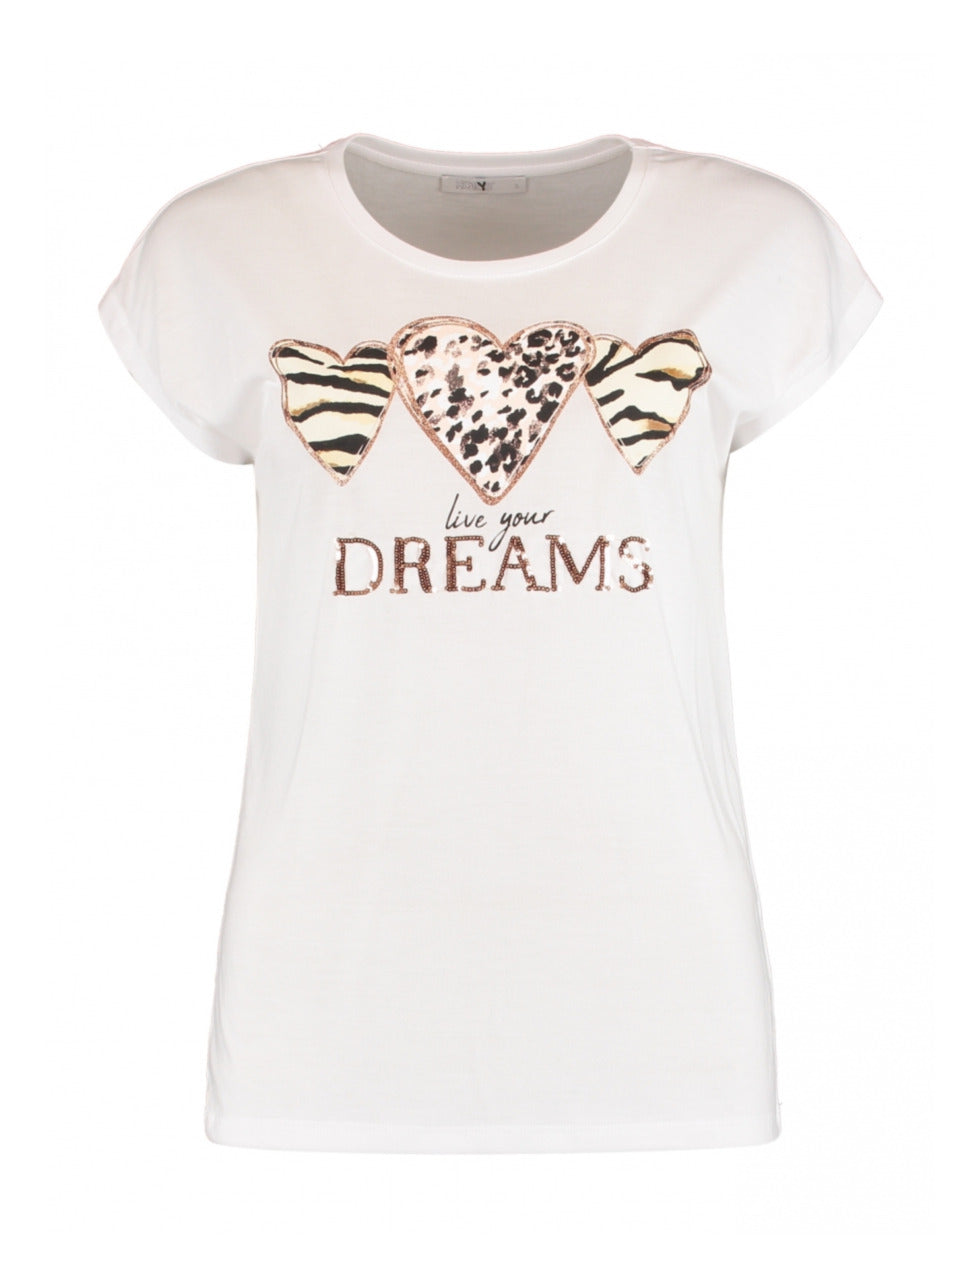 Linka White Dreams T-Shirt